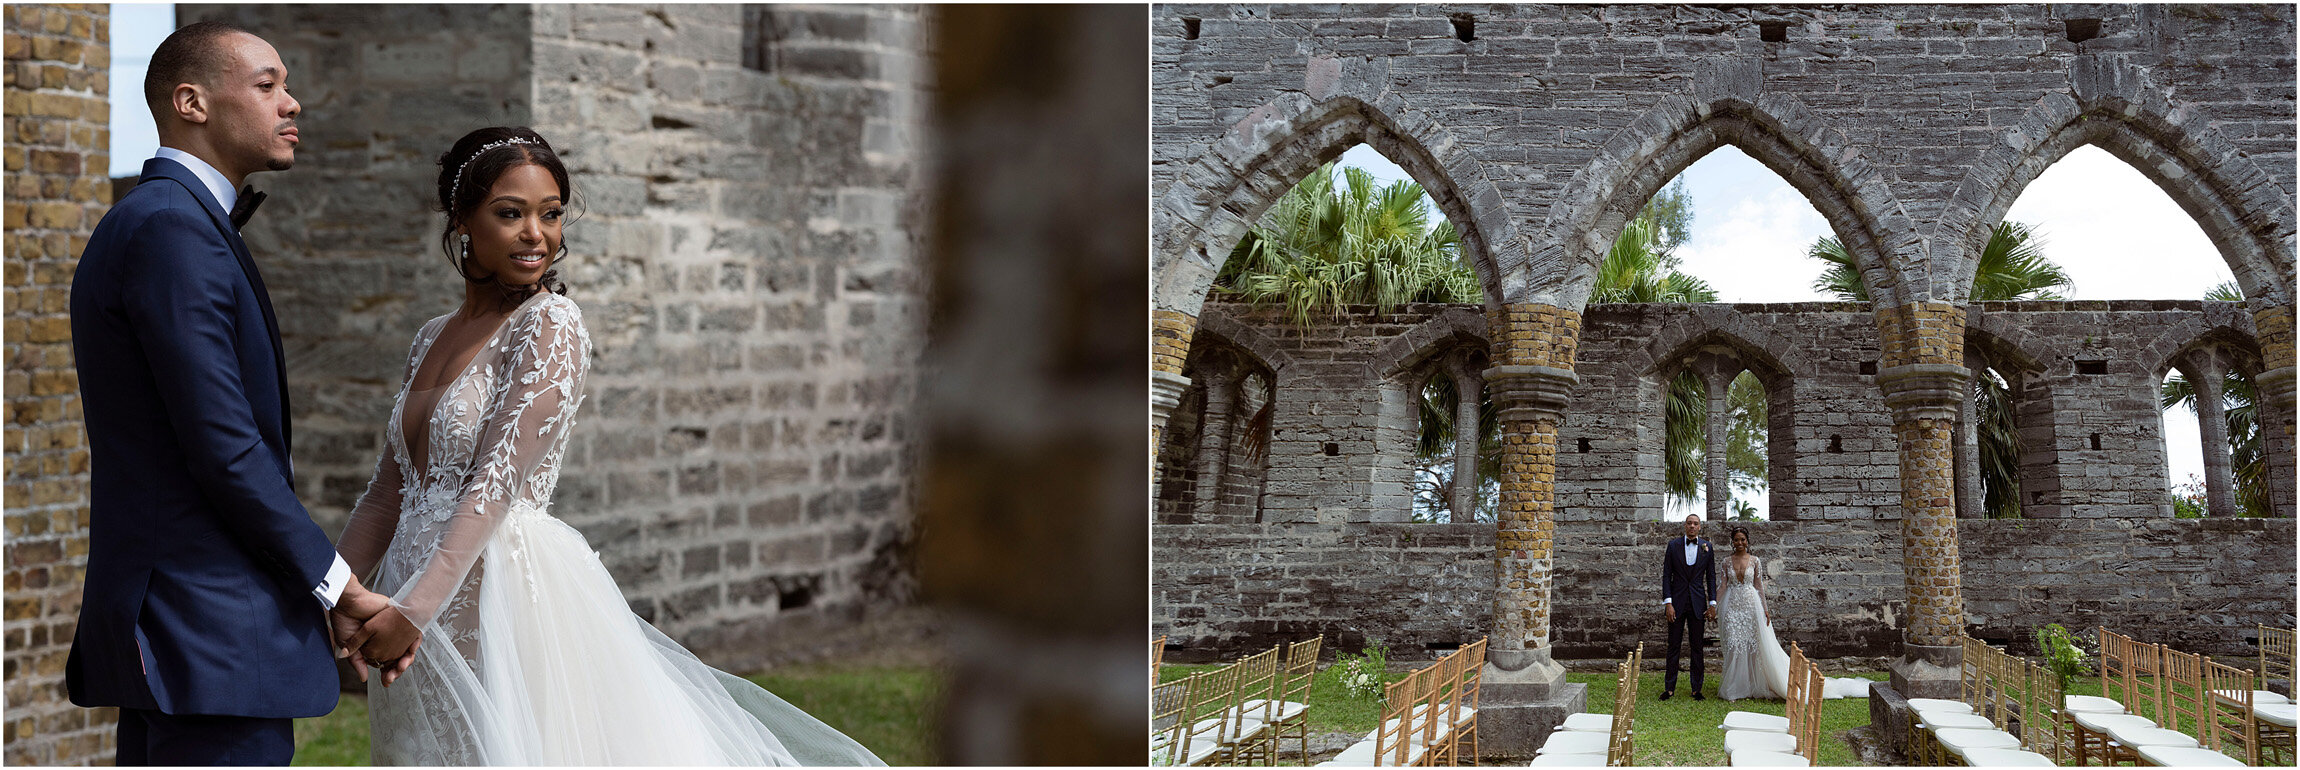 ©Fiander Foto_Bermuda Wedding Photographer_Unfinished Church_Janeese_Kyle_009.jpg